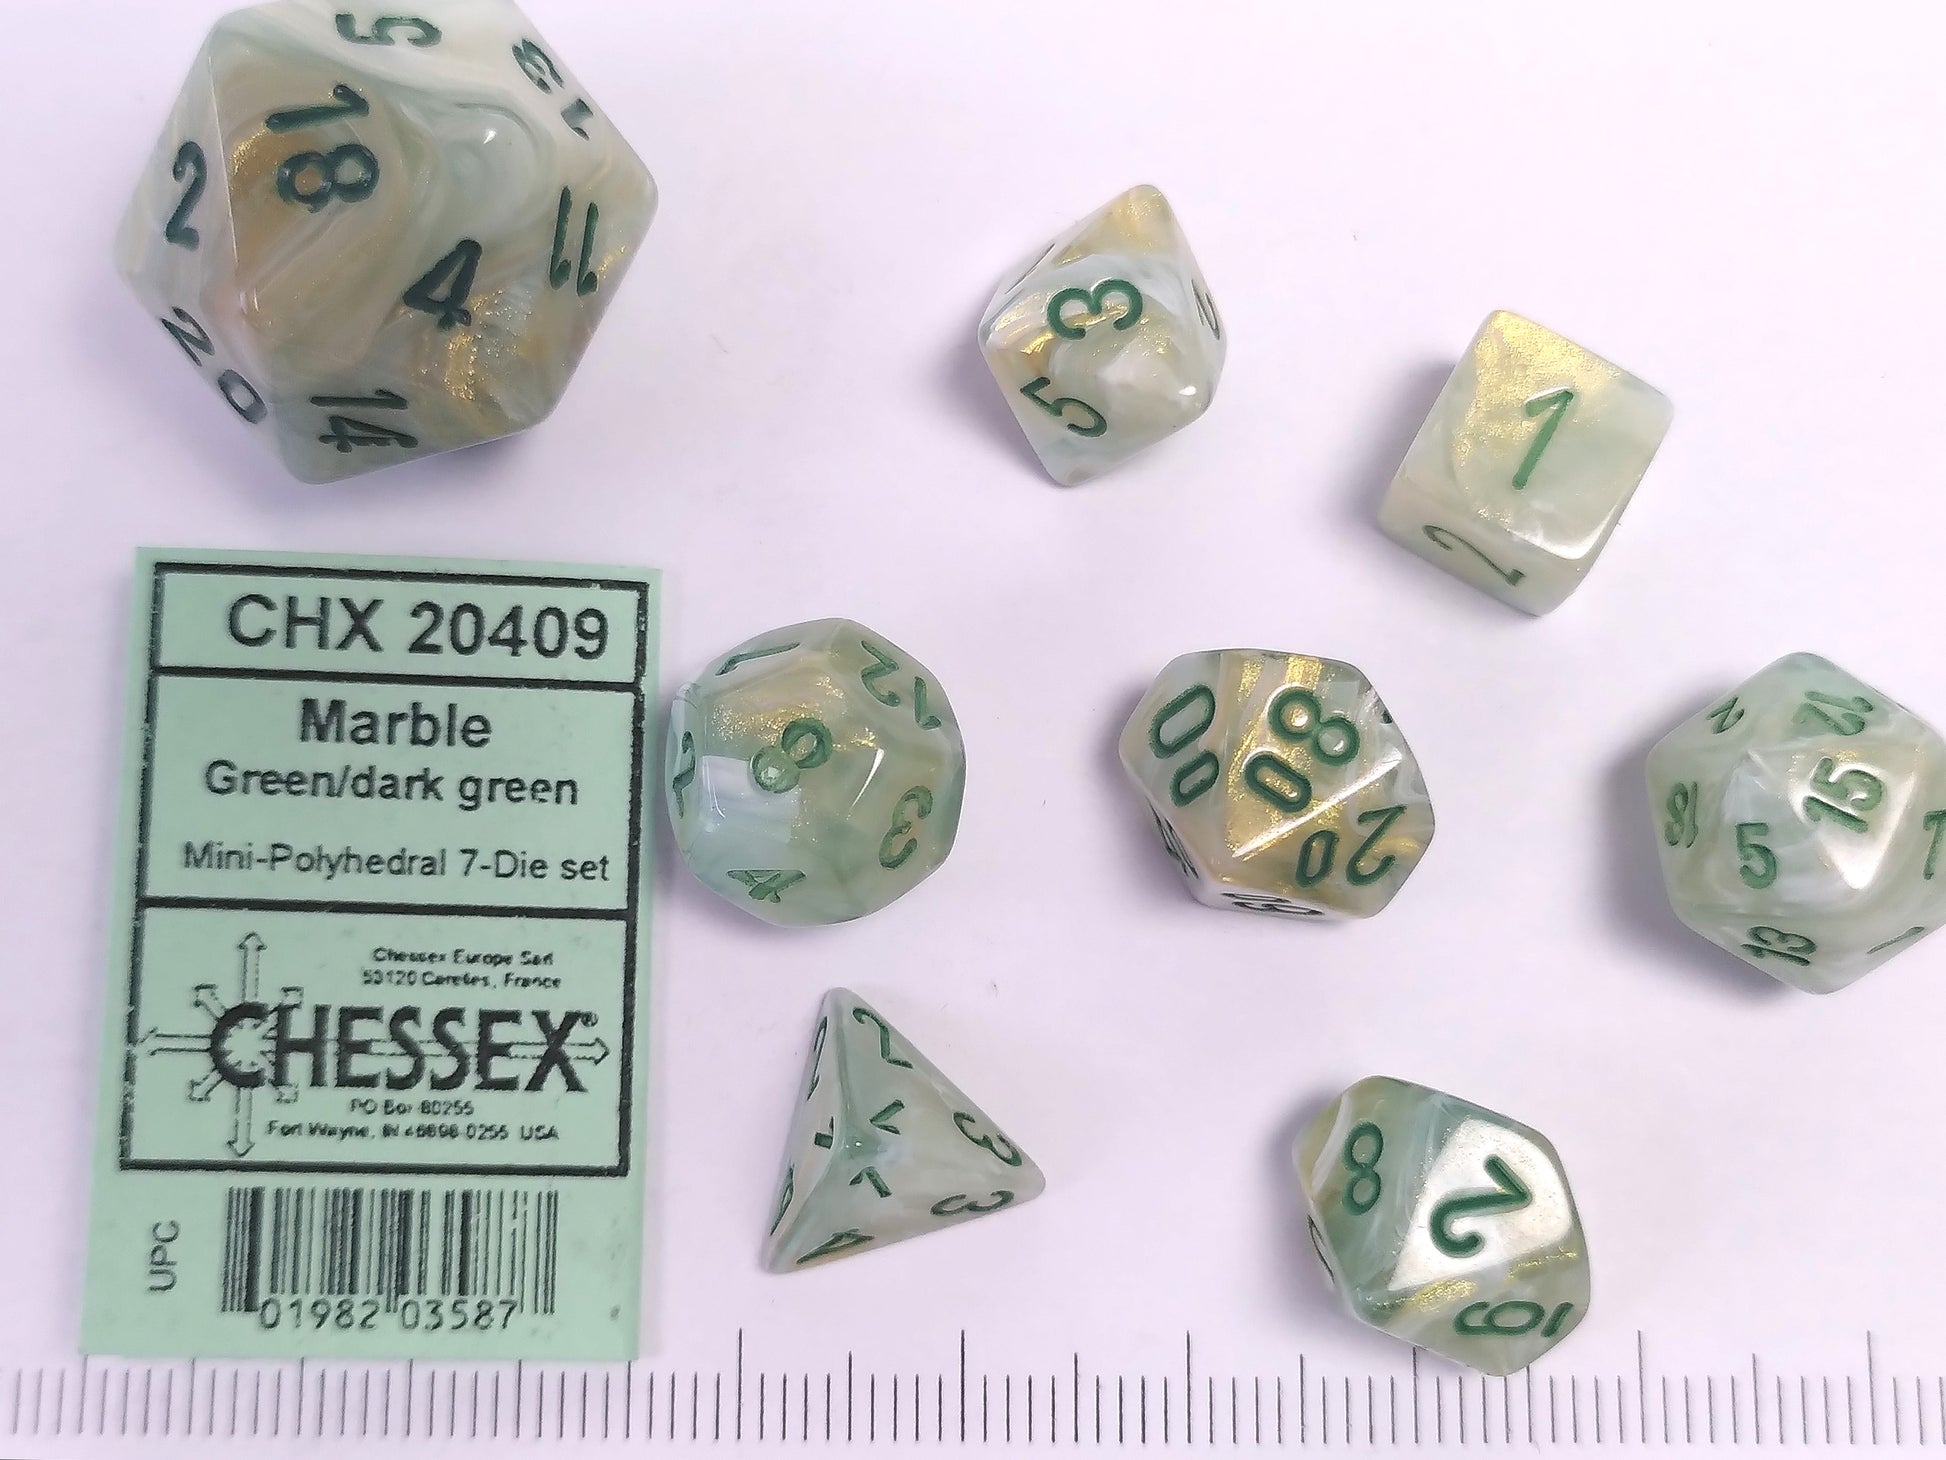 Mini polydice set - Marble Green w/dark green